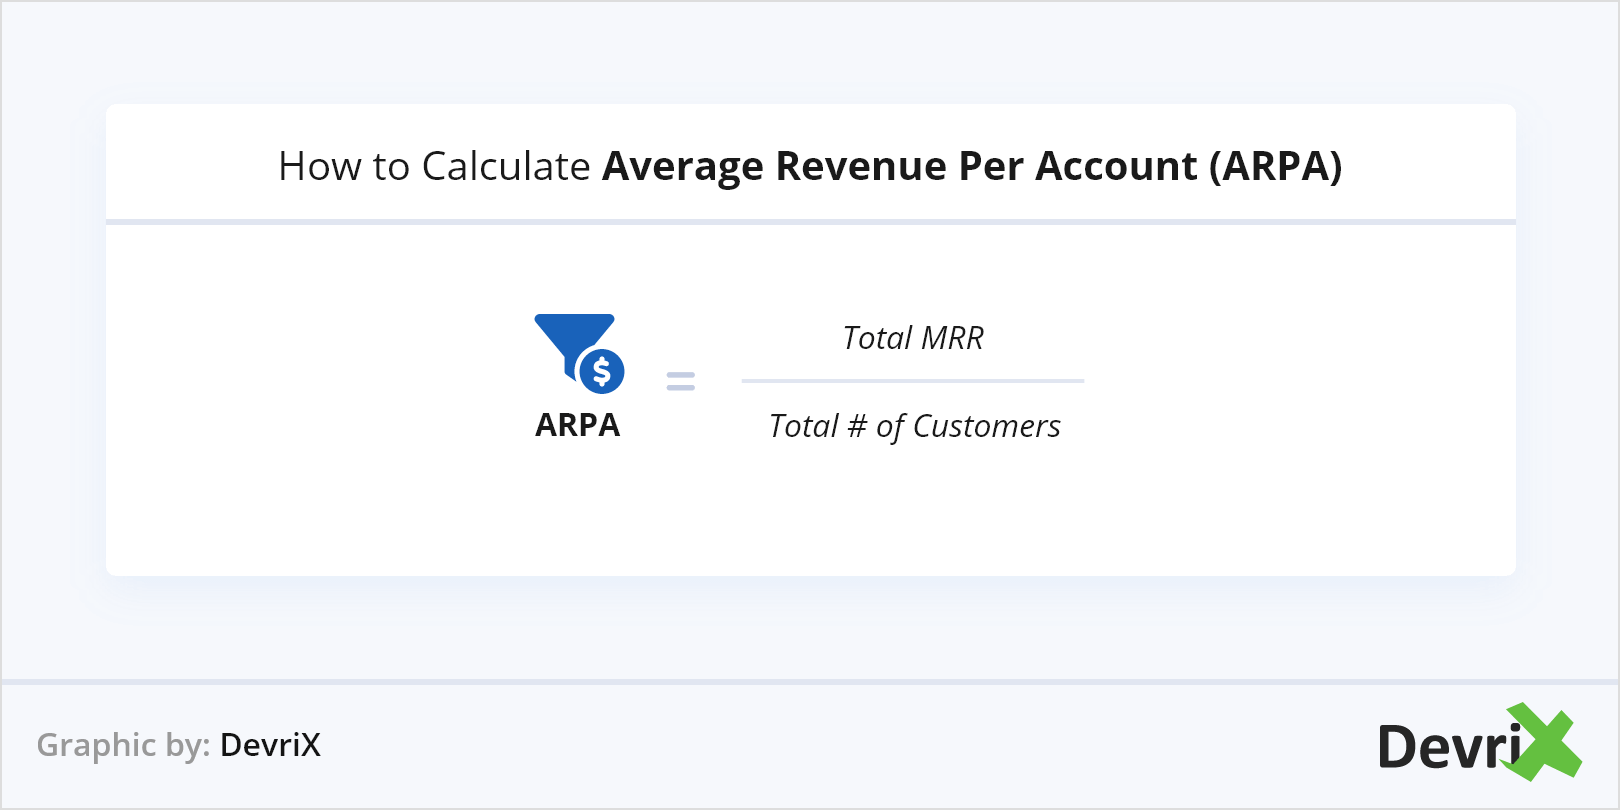 How to Calculate Average Revenue Per Account (ARPA)